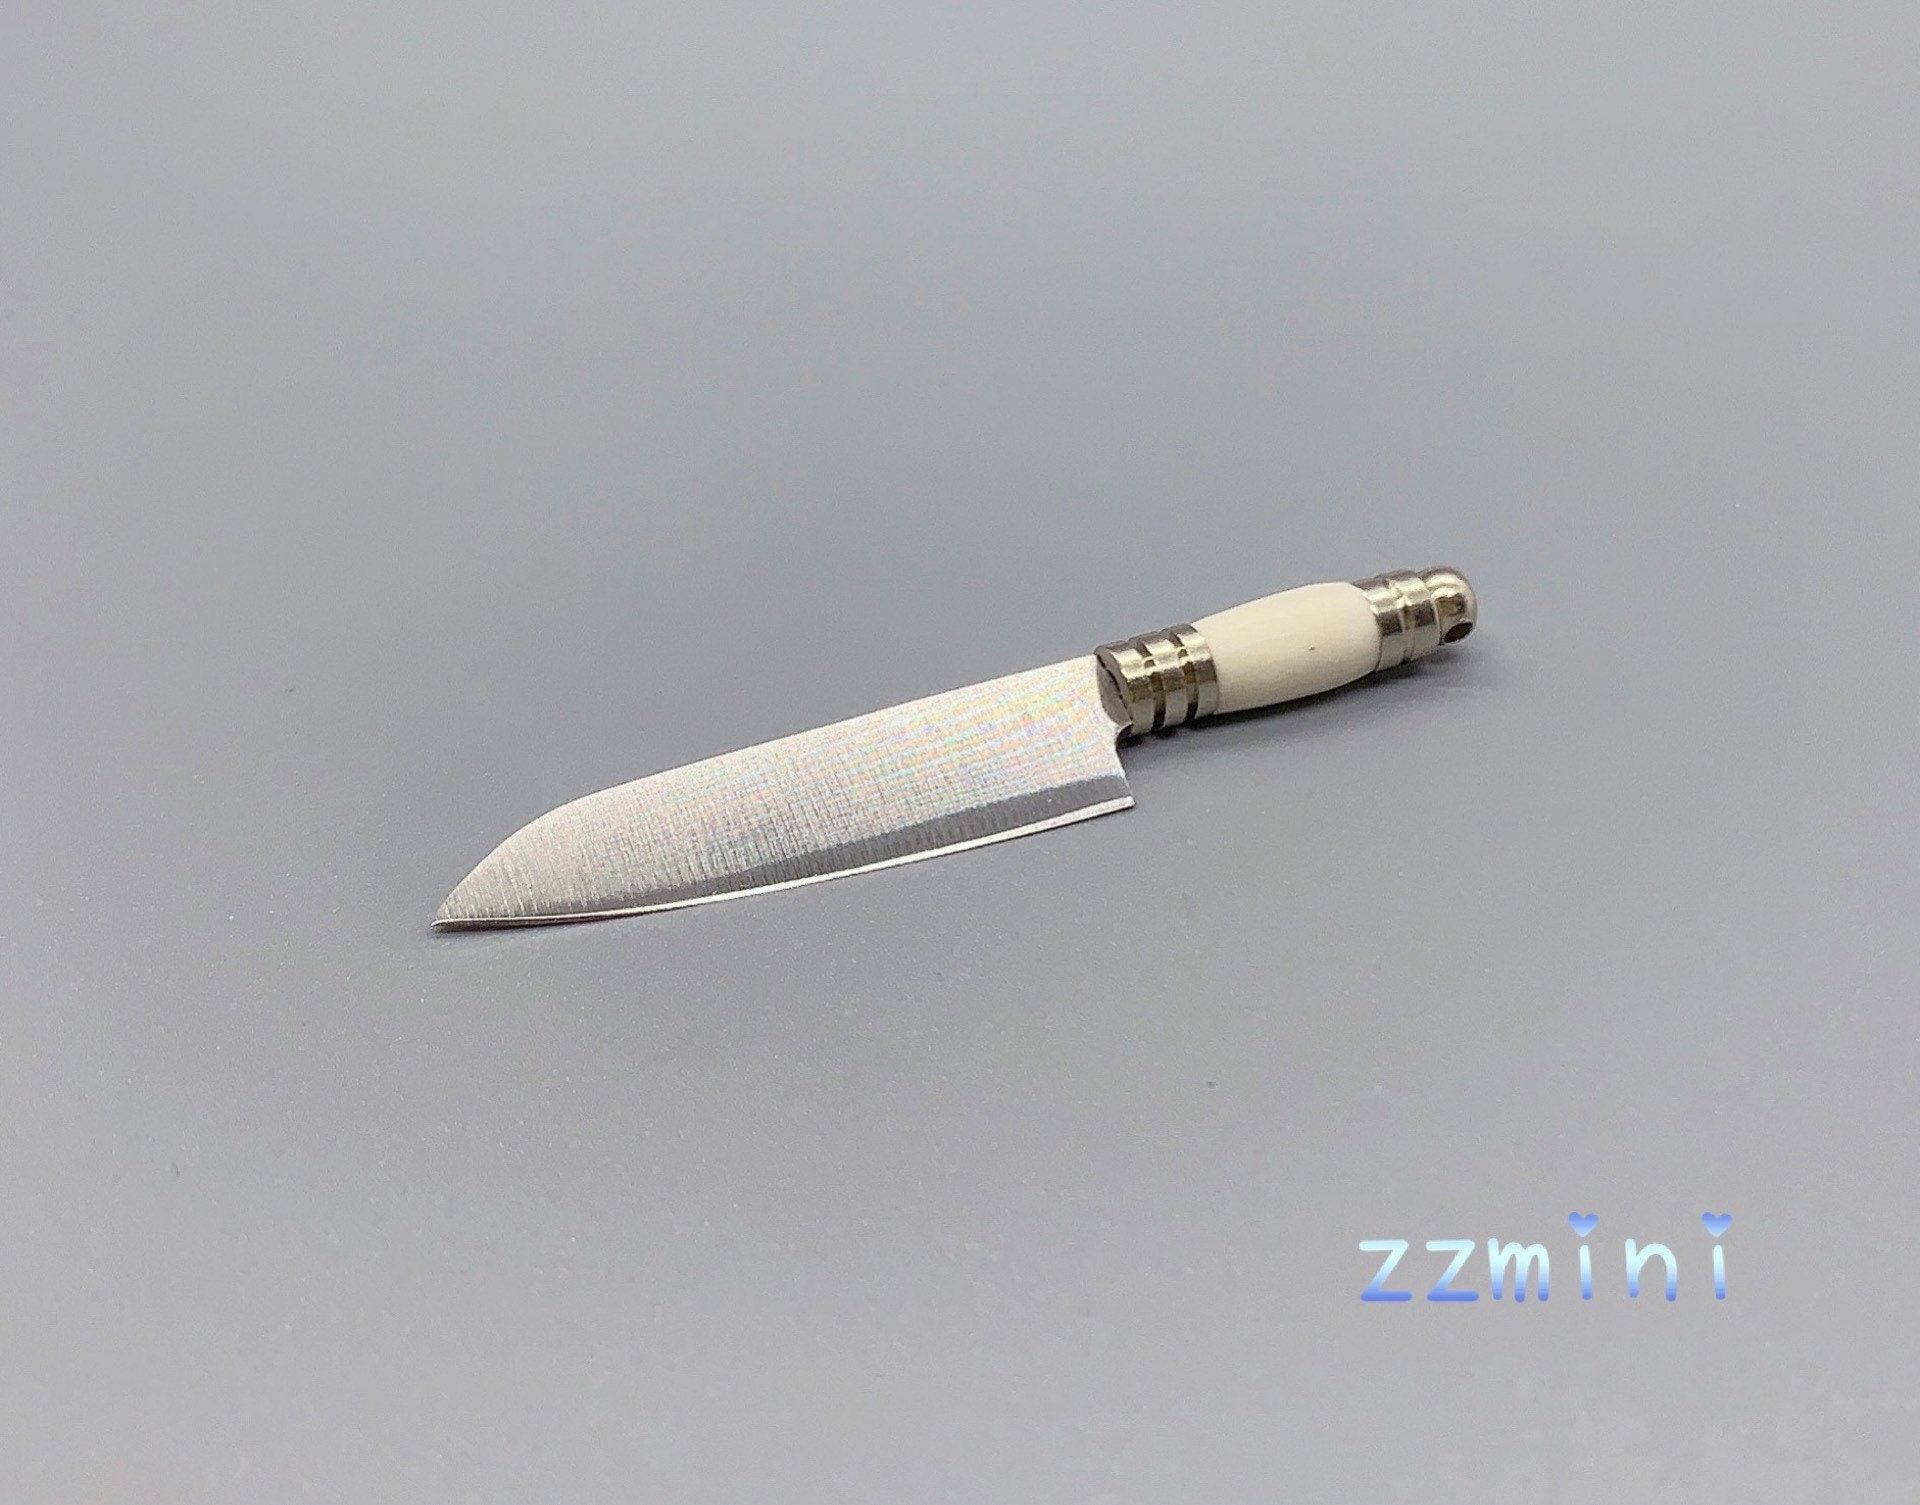 Miniature Cooking Real Santoku Knife : cut real tiny edible food – Real Mini  World